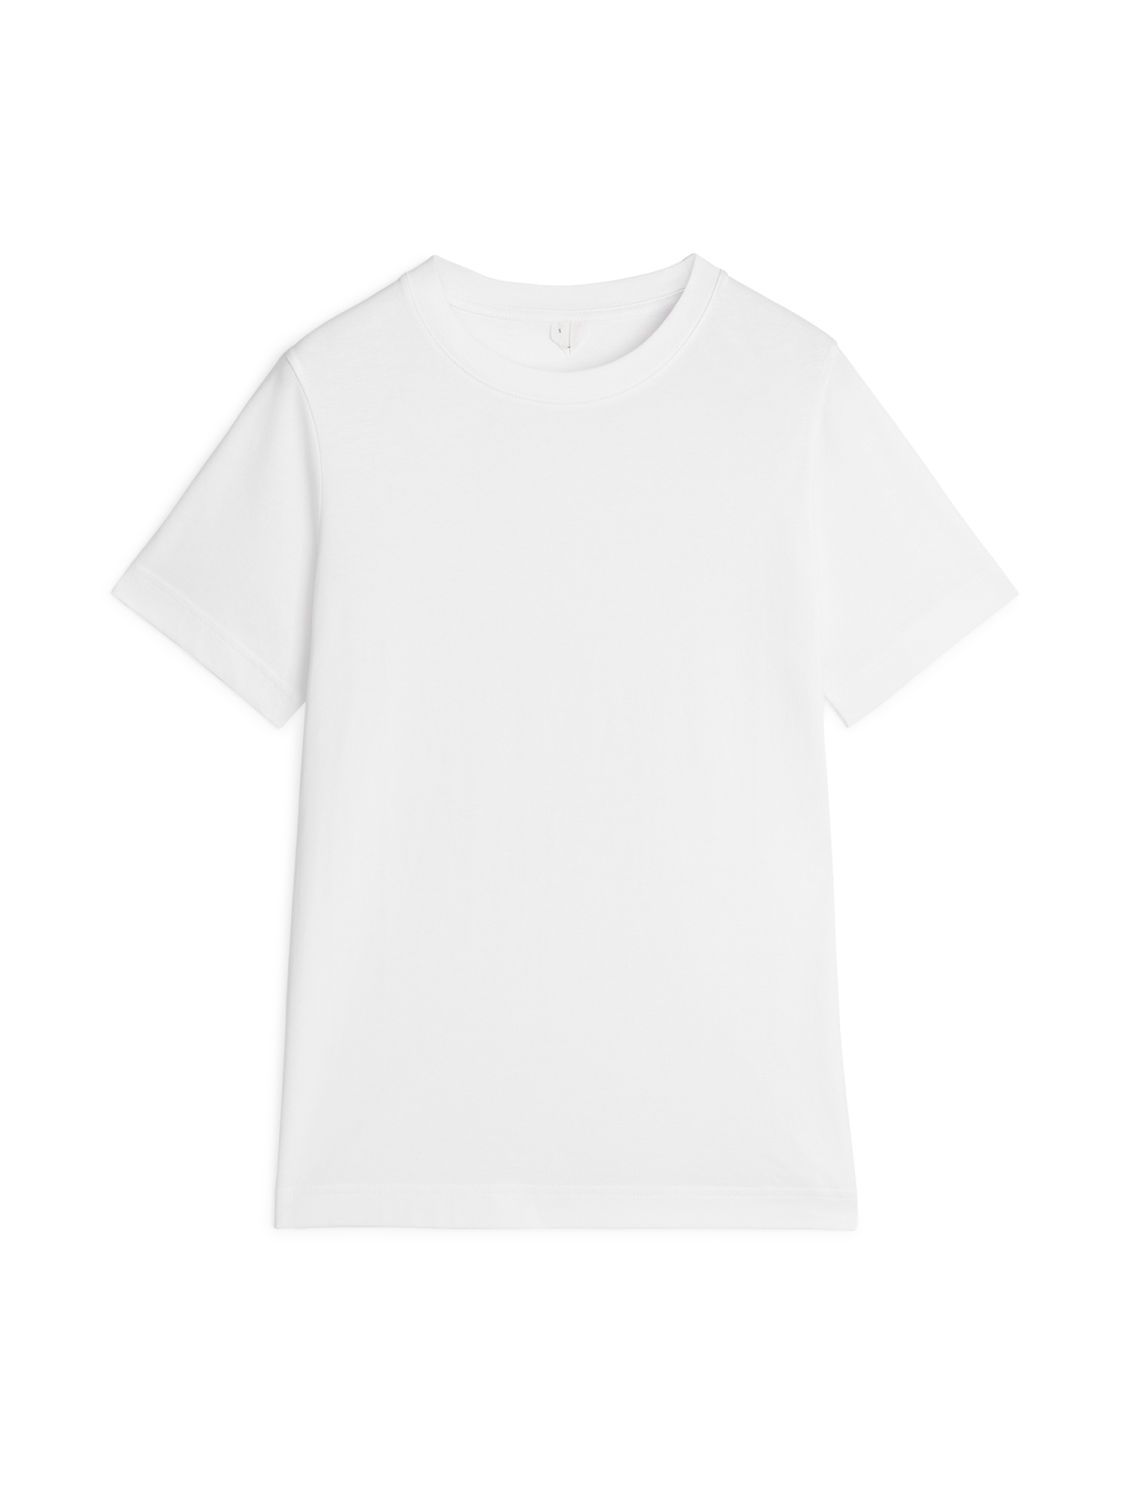 Crew-Neck T-shirt - White - Tops - ARKET GB | ARKET (US&UK)